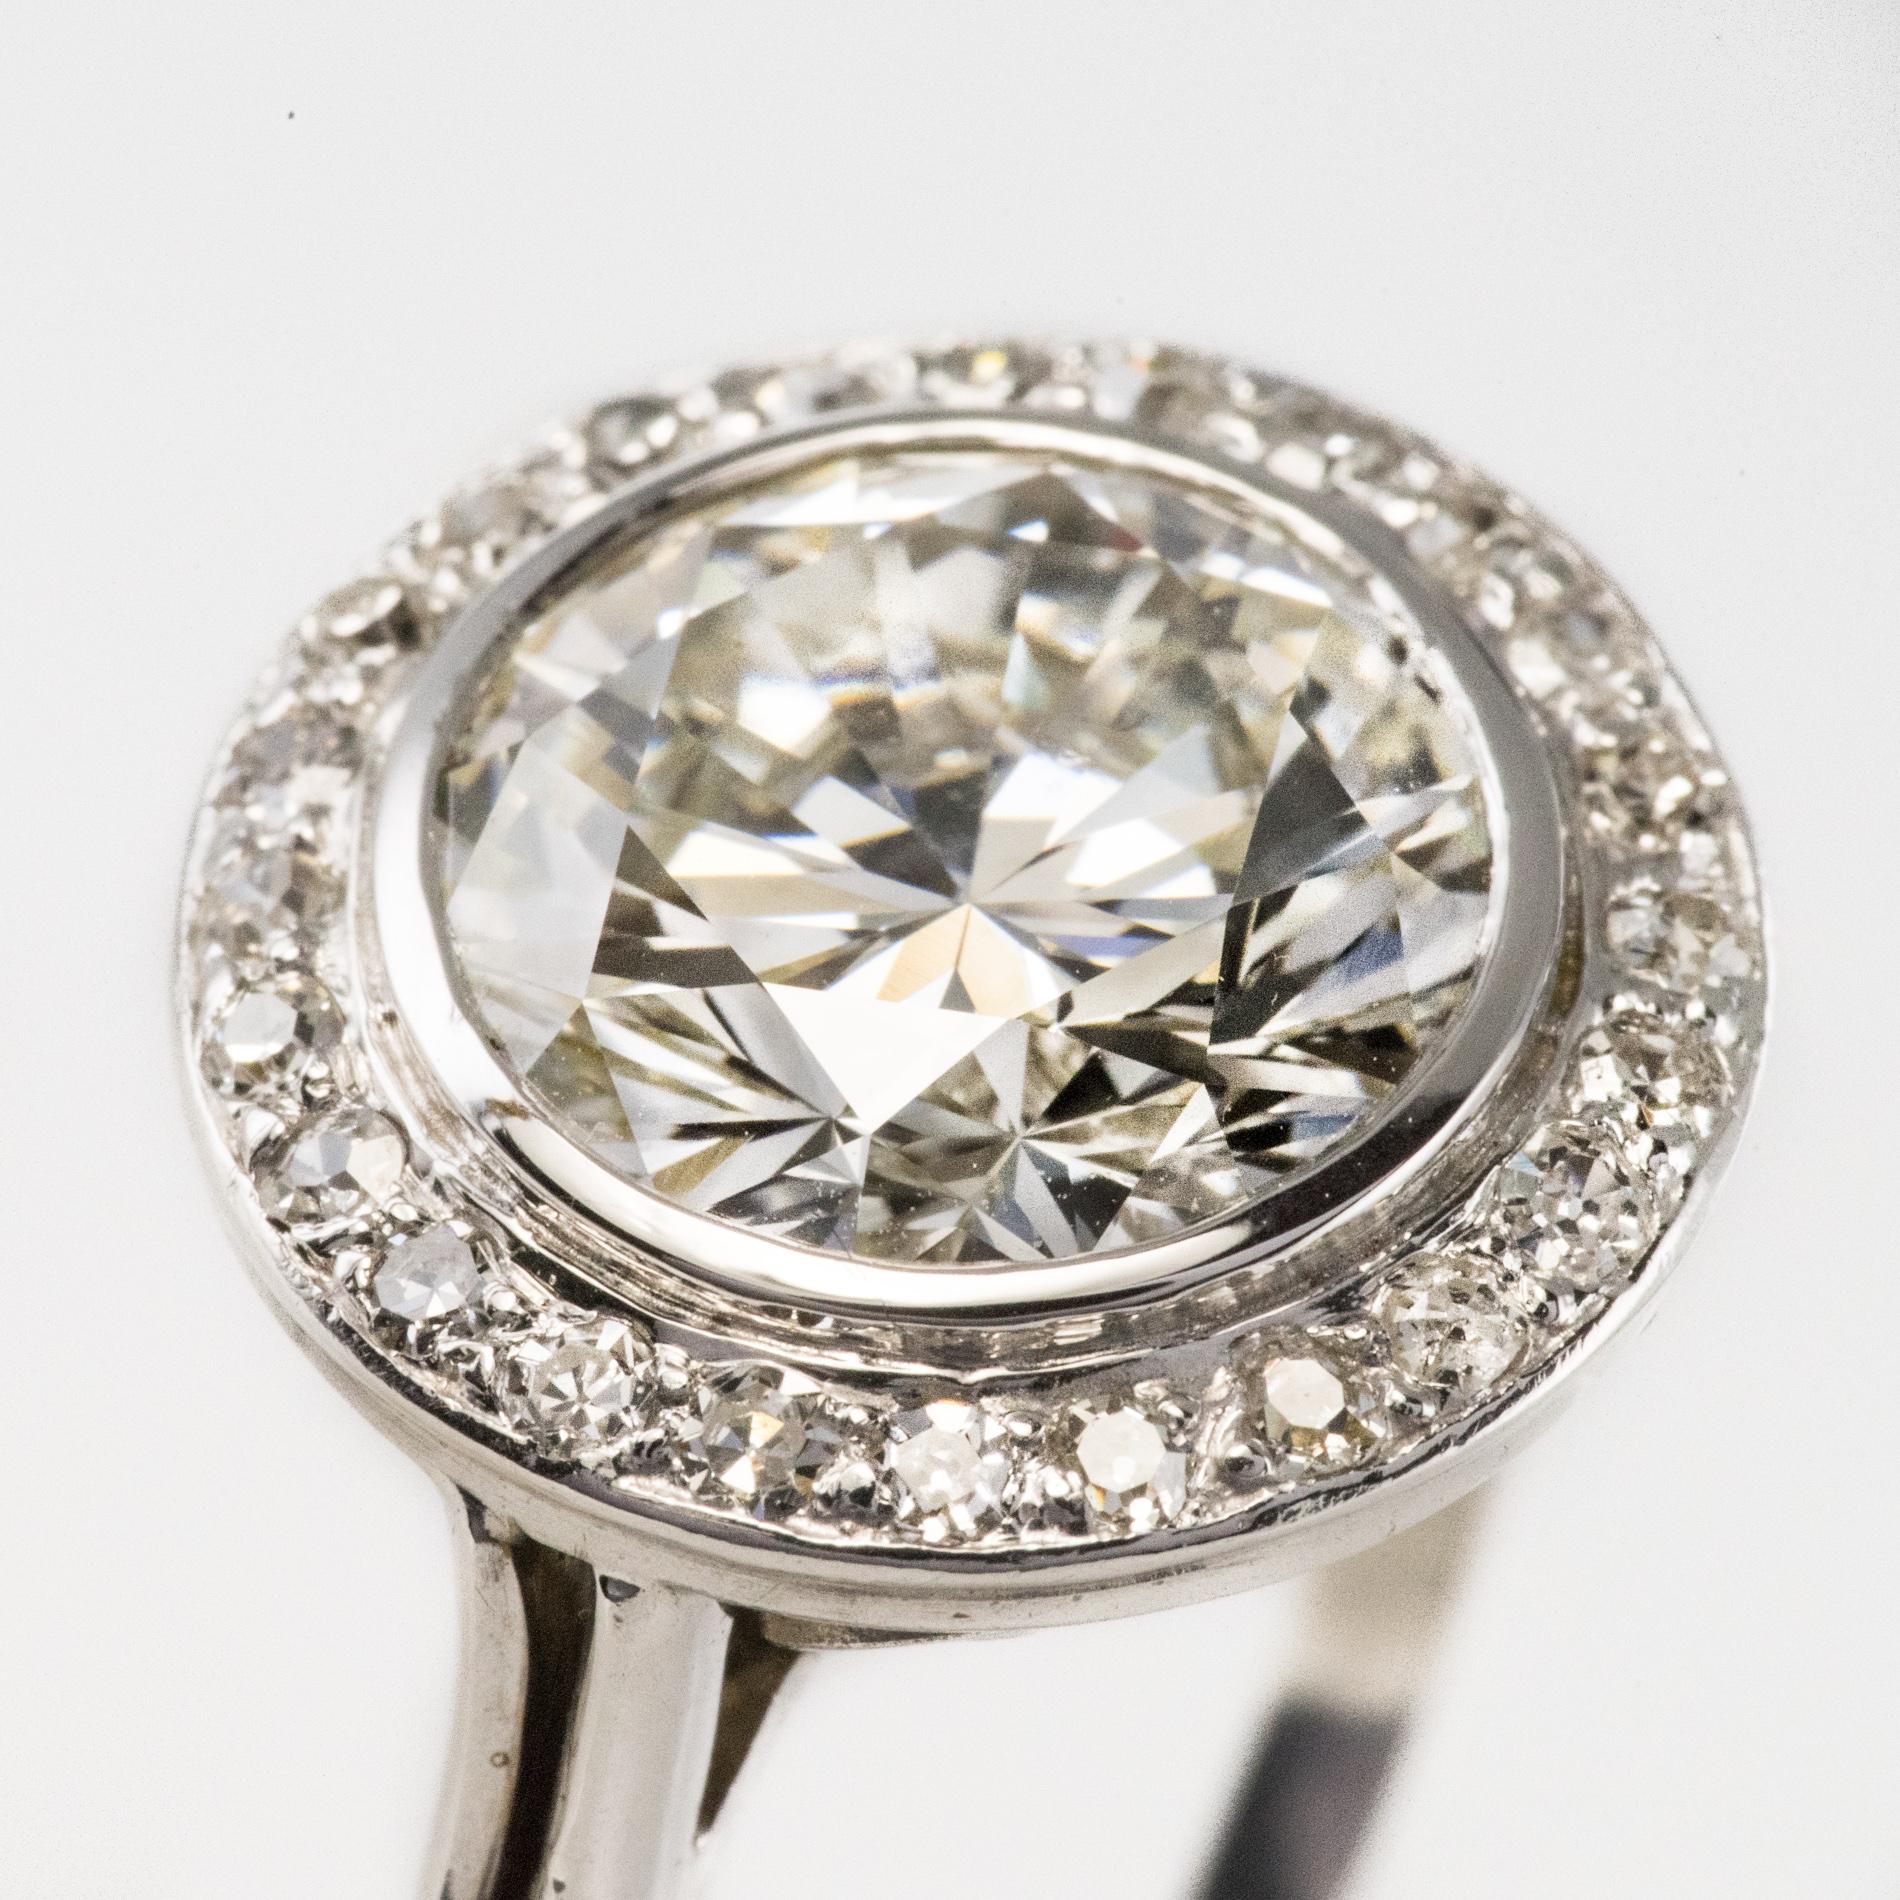 French 1930s Art Deco 18 Karat White Gold 3.84 Carat Diamond Ring For Sale 1